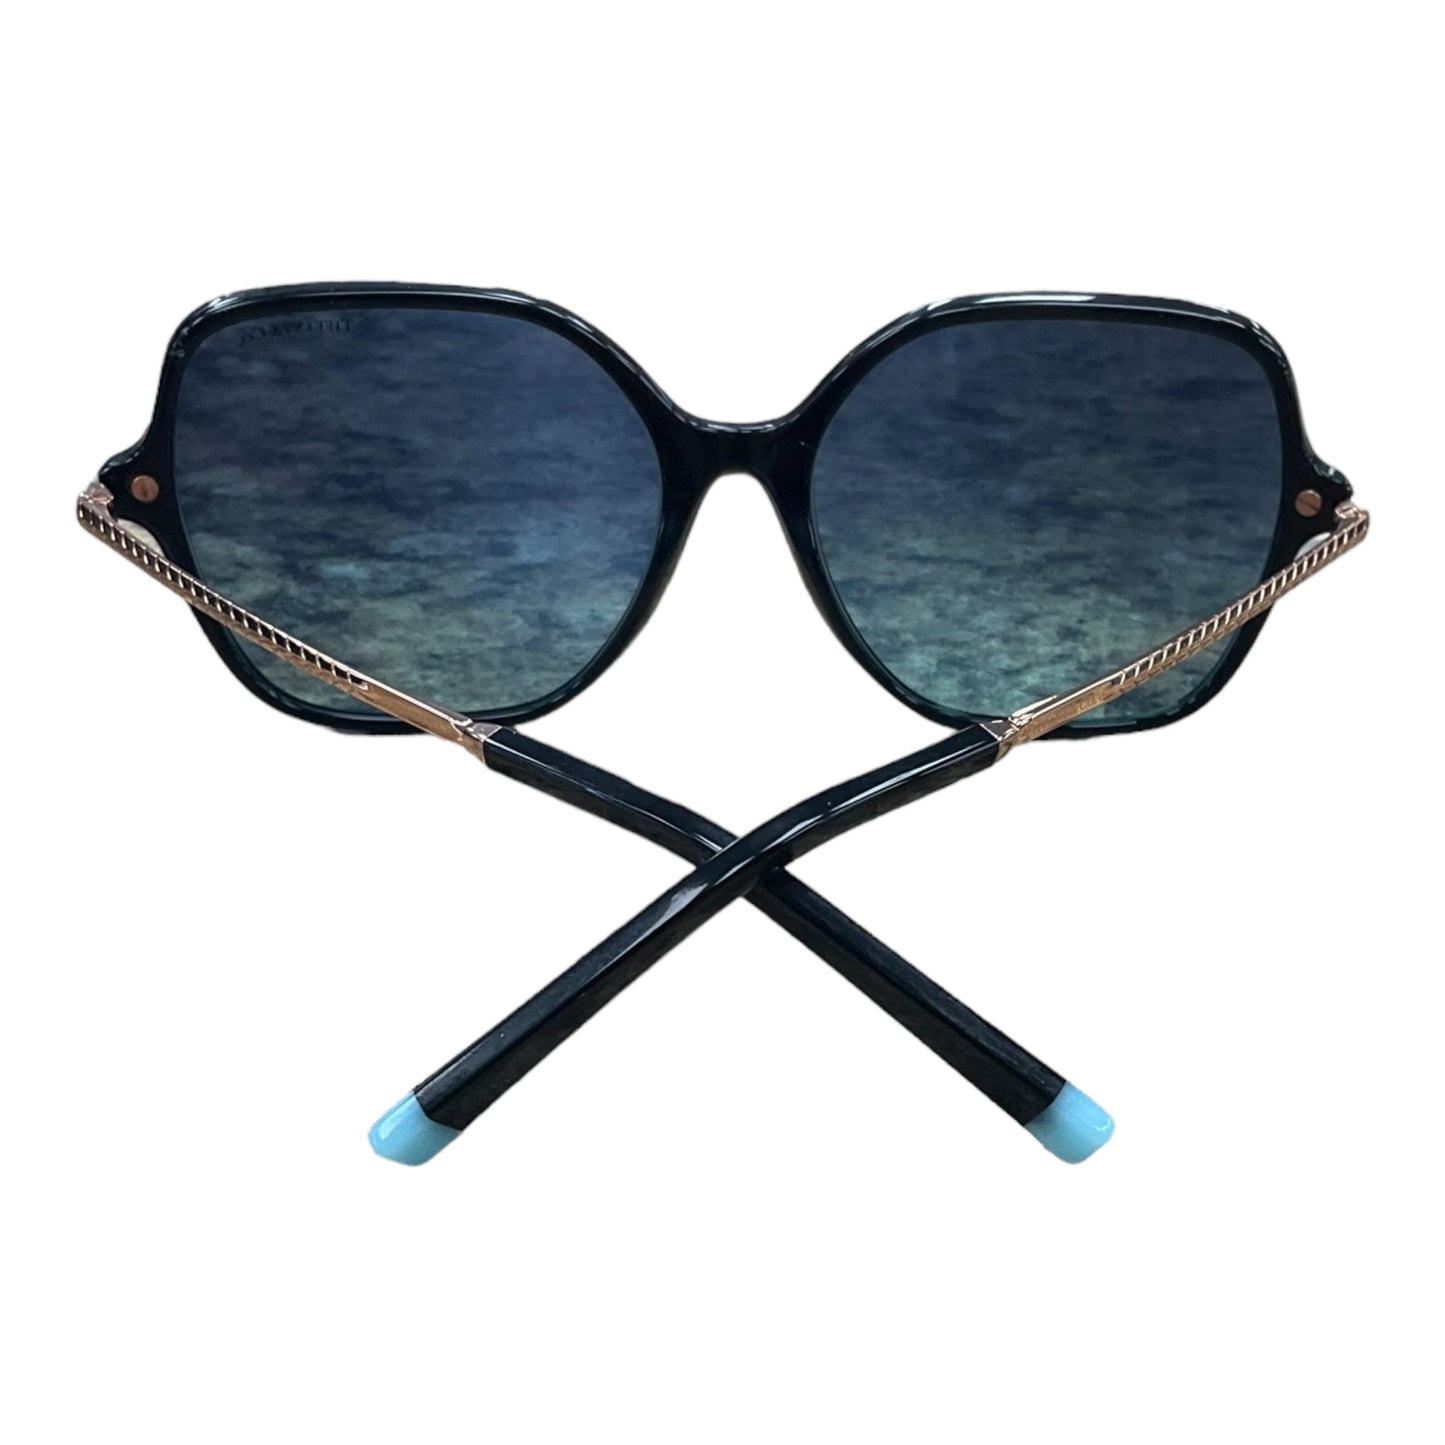 Sunglasses By Tiffany And Company